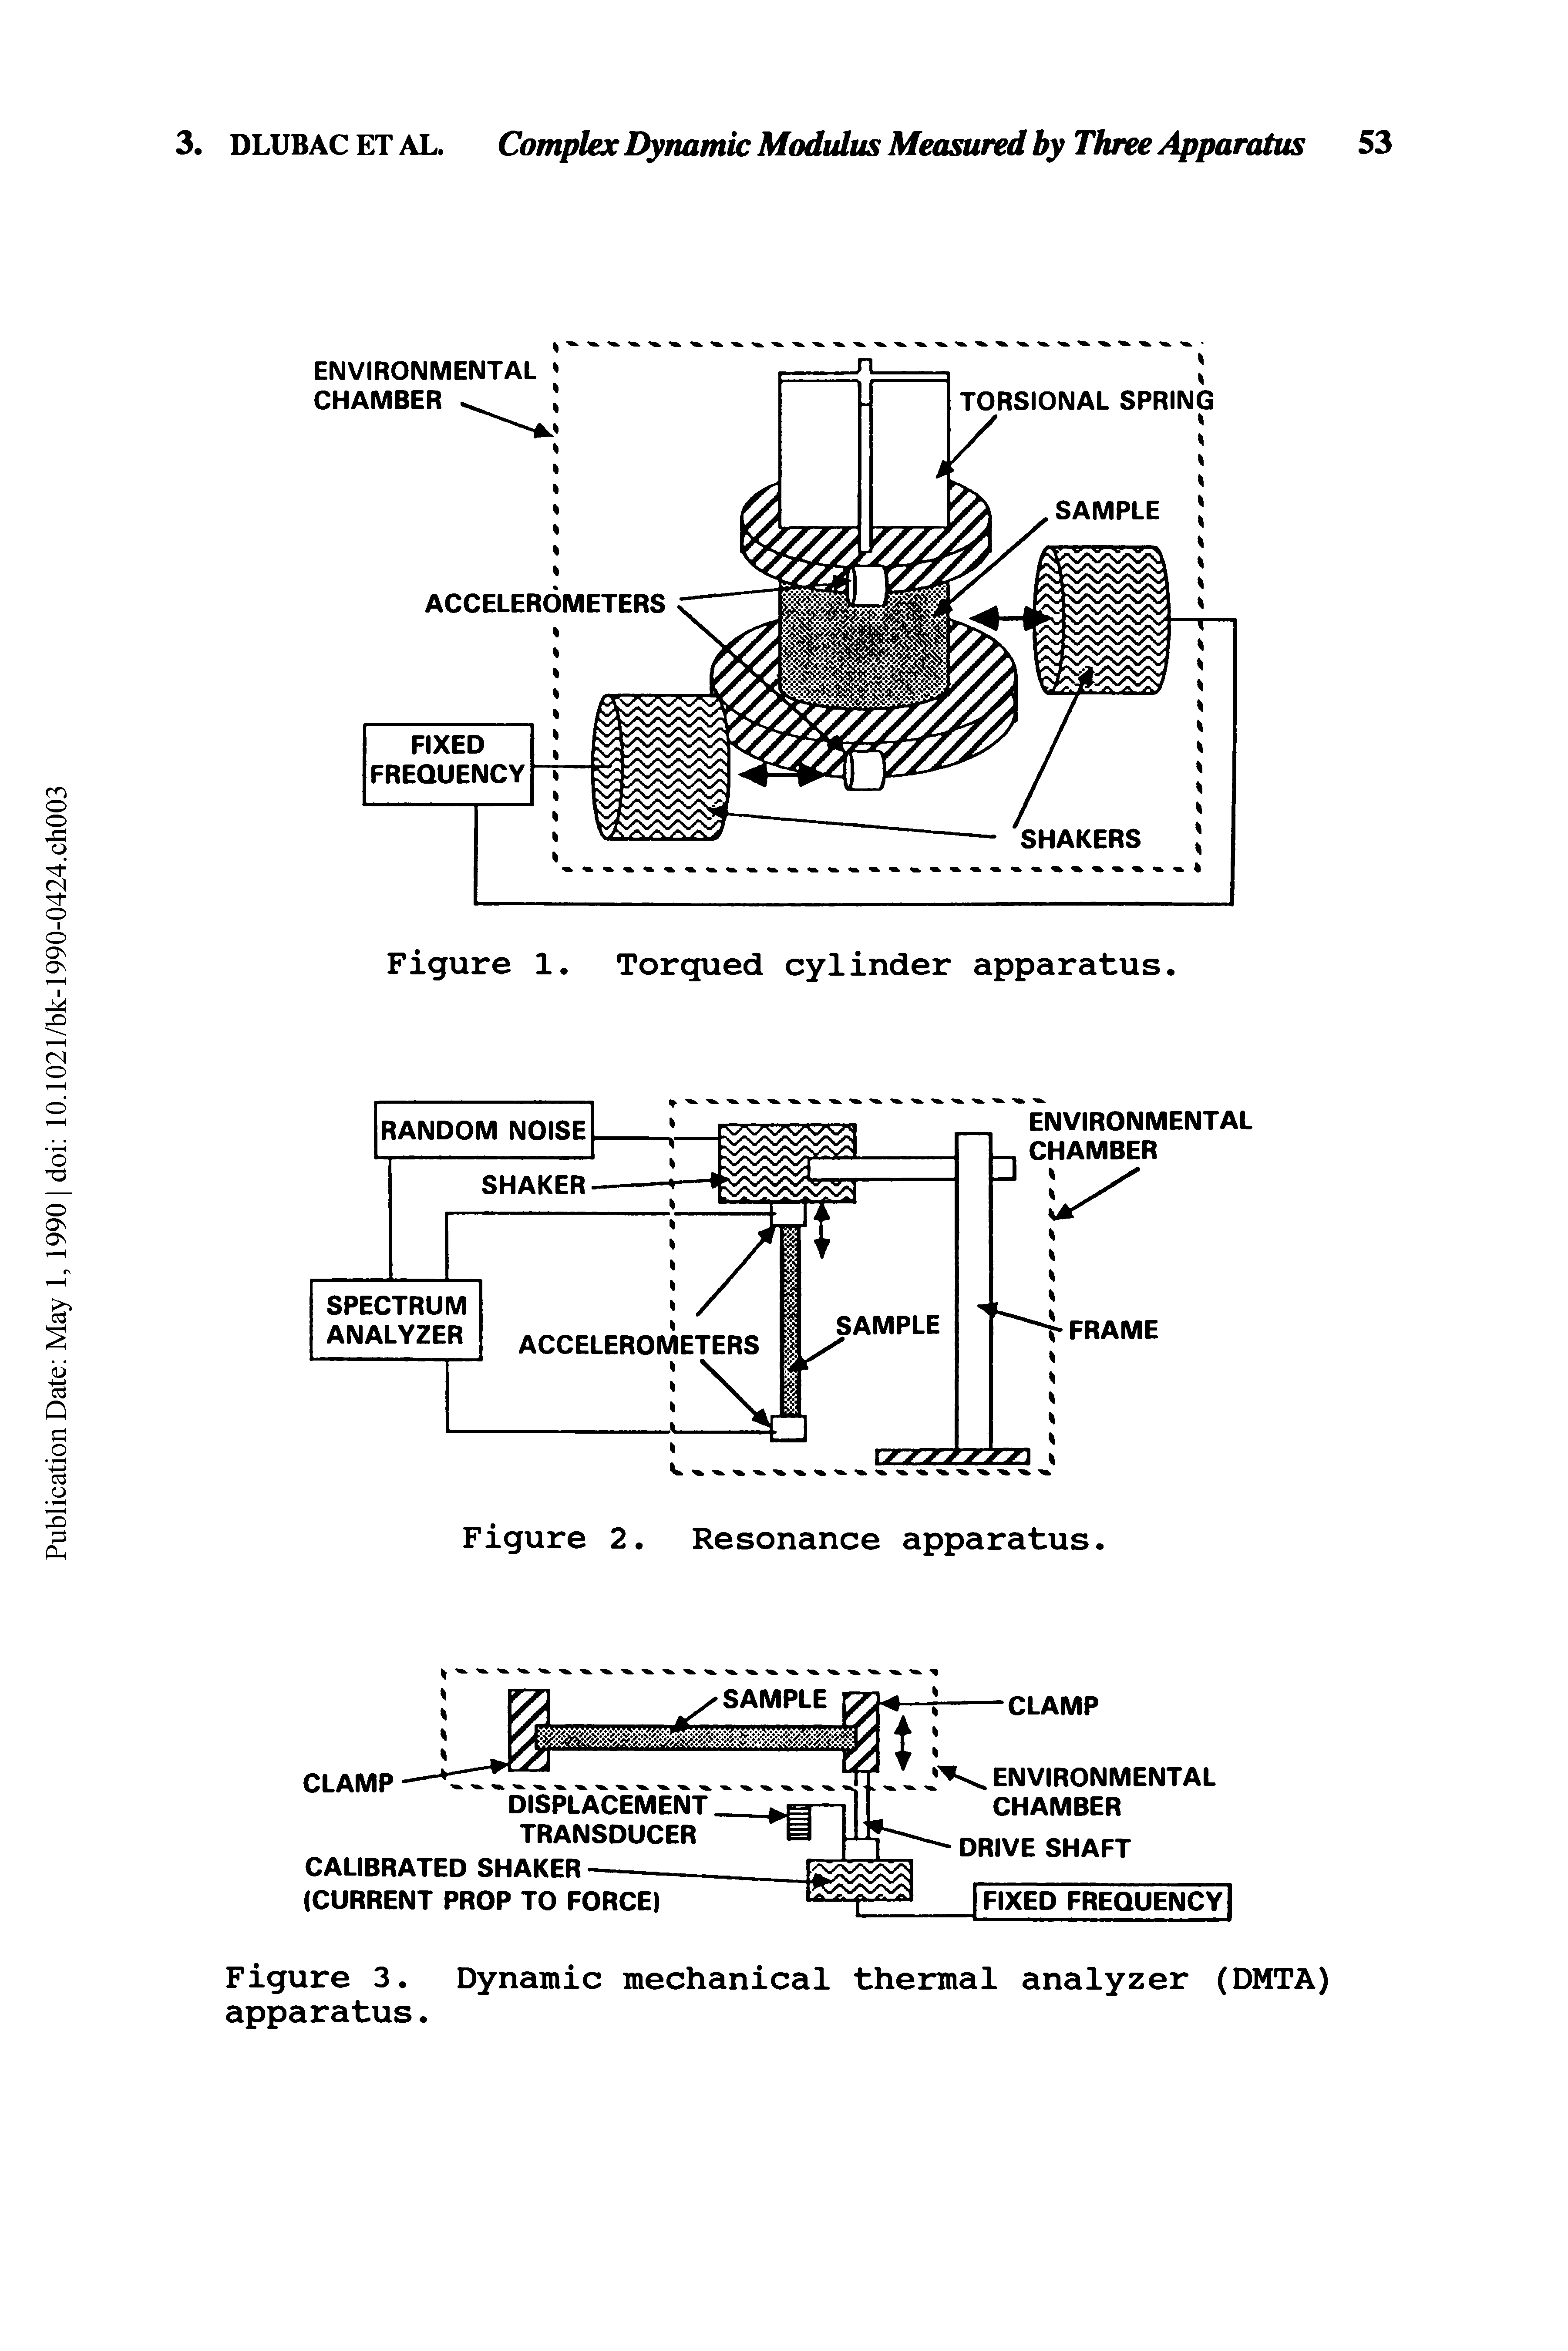 Figure 3. Dynamic mechanical thermal analyzer (DMTA) apparatus.